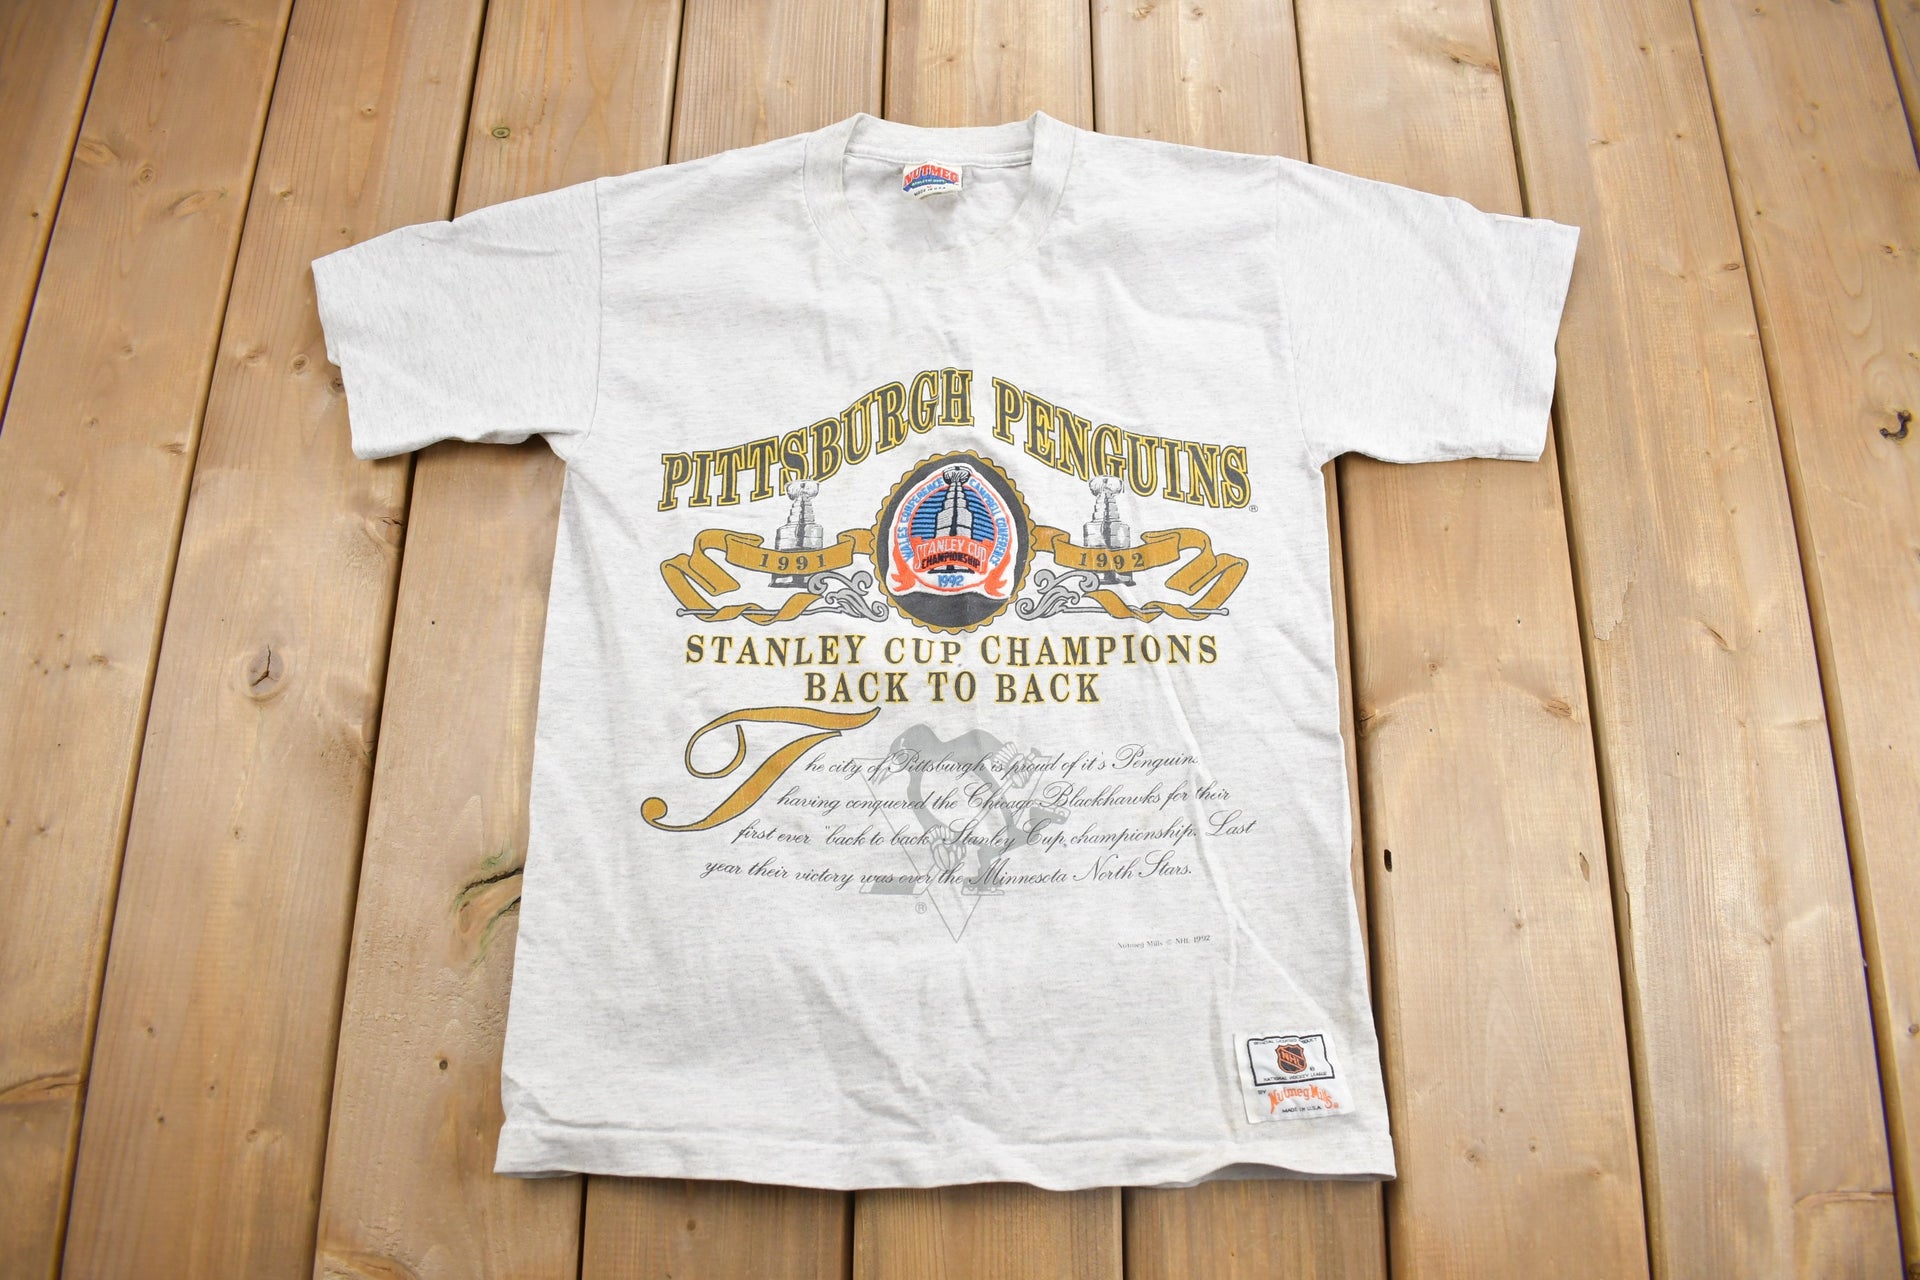 94' Pittsburgh Penguins Print Black T-Shirt - 5 Star Vintage